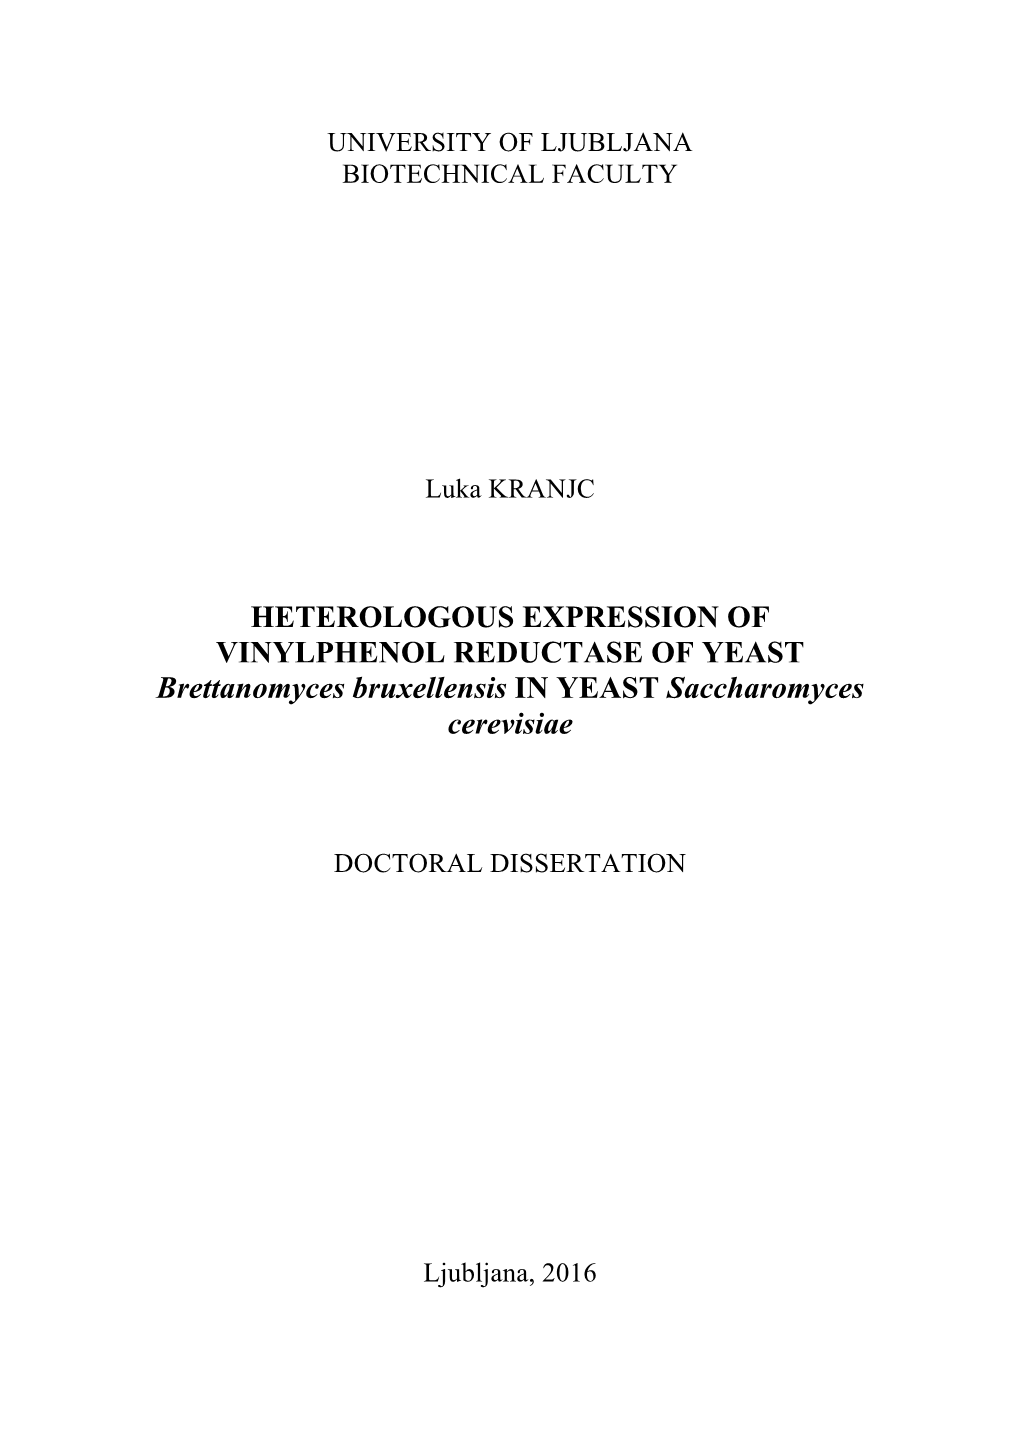 HETEROLOGOUS EXPRESSION of VINYLPHENOL REDUCTASE of YEAST Brettanomyces Bruxellensis in YEAST Saccharomyces Cerevisiae